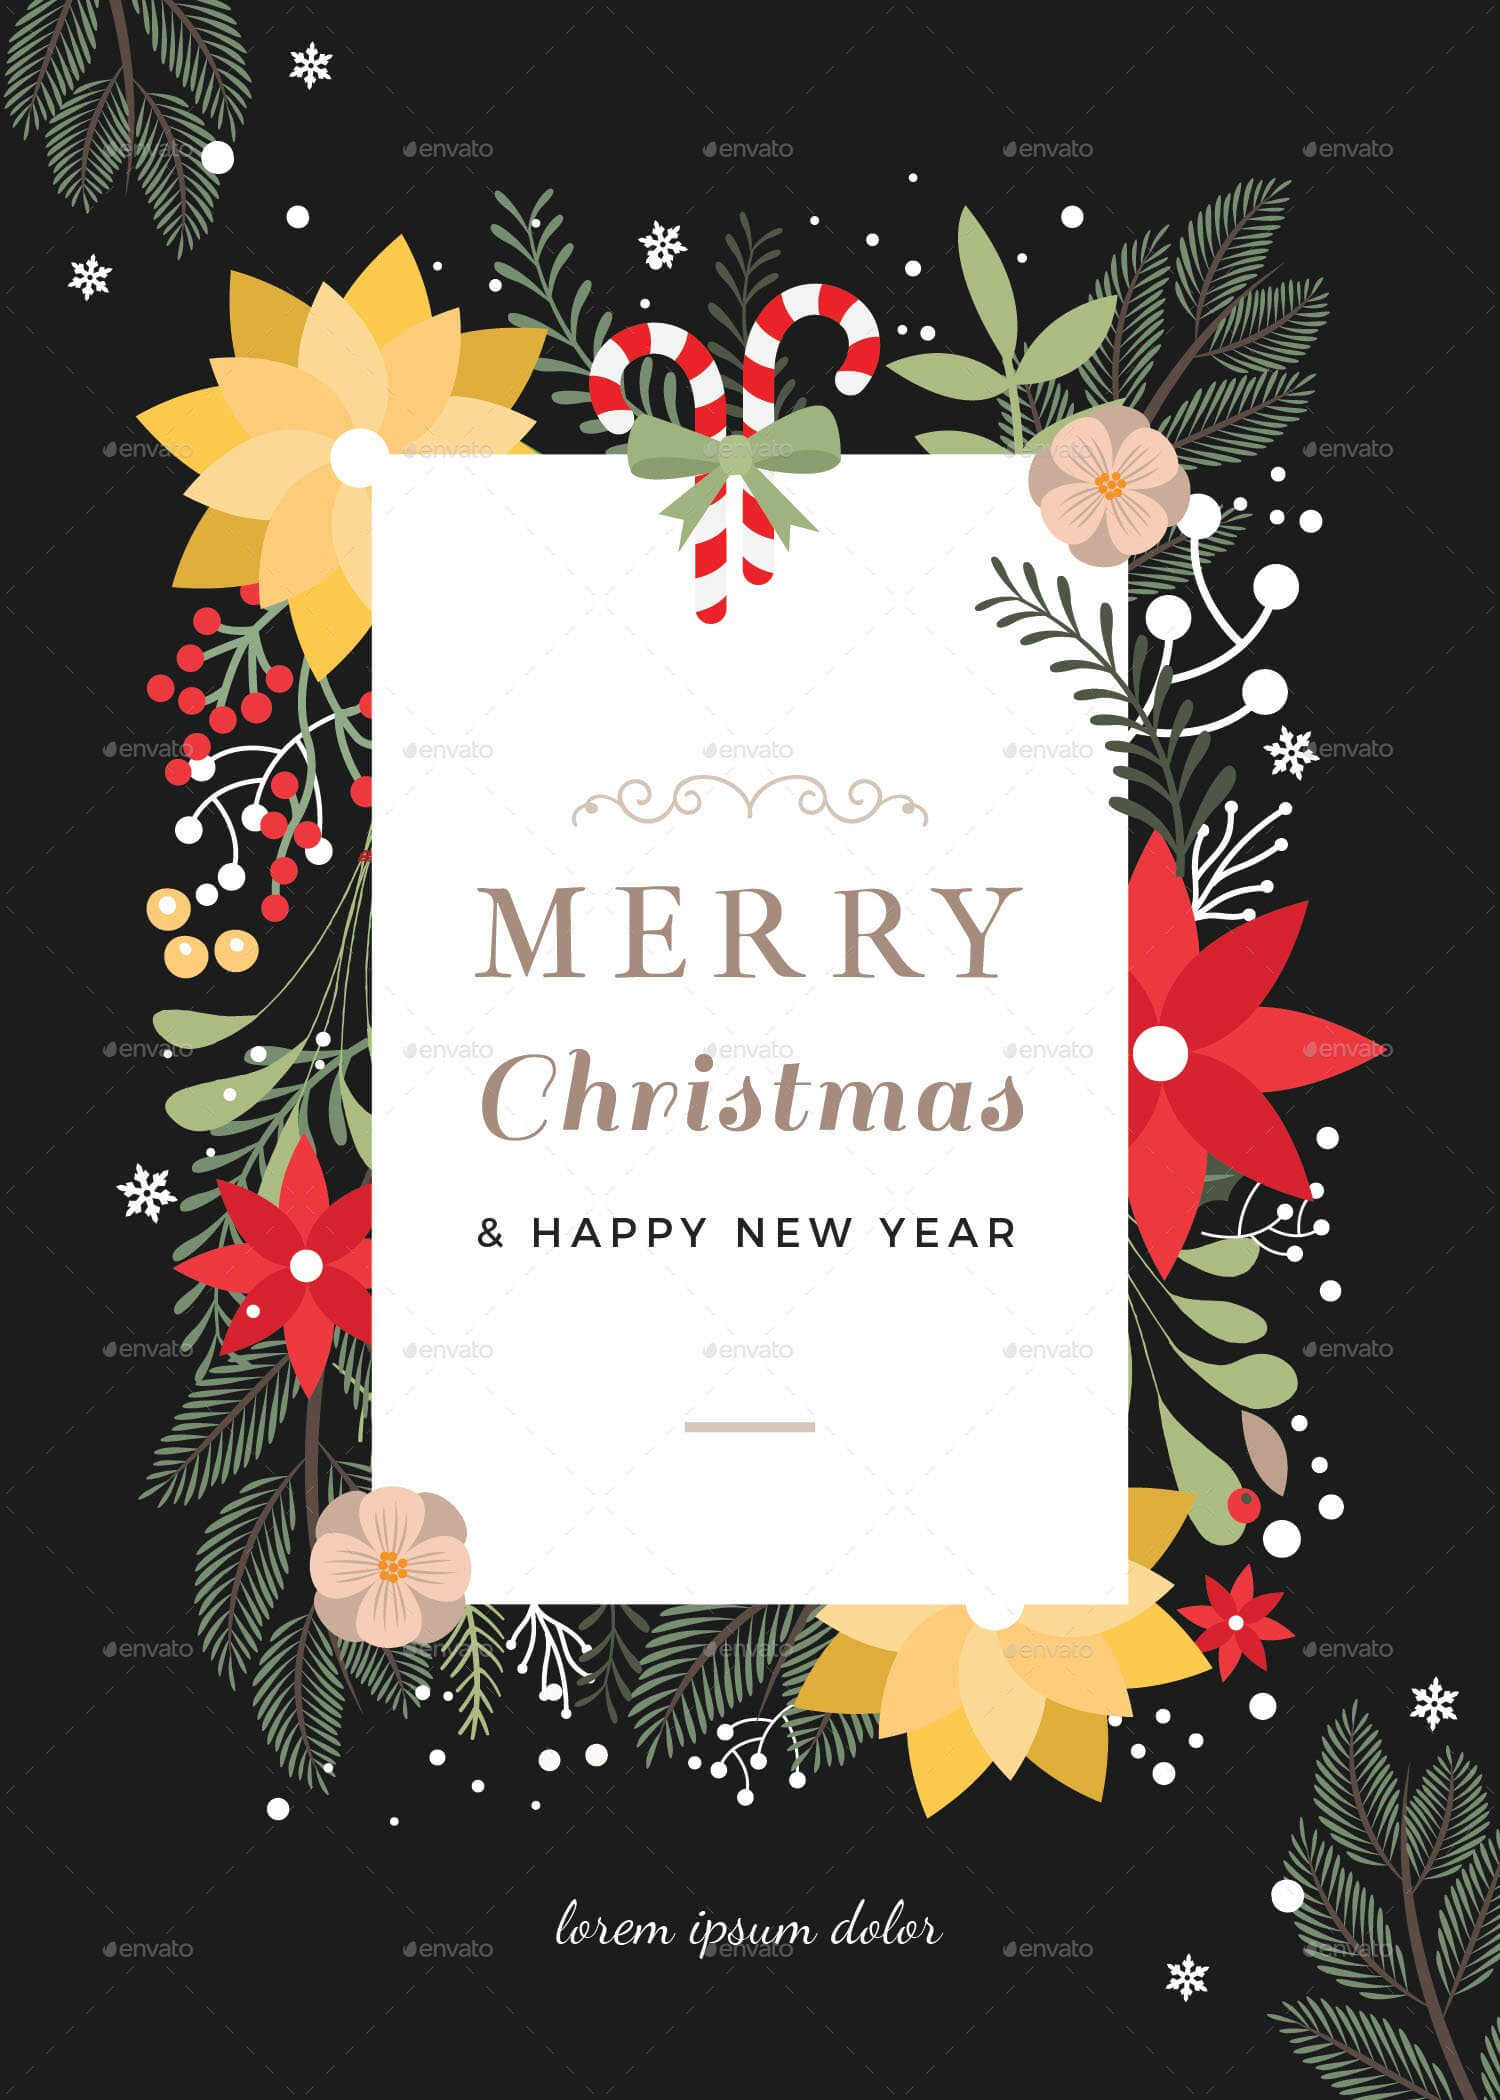 45+Christmas Premium & Free Psd Holiday Card Templates For Within Christmas Photo Card Templates Photoshop